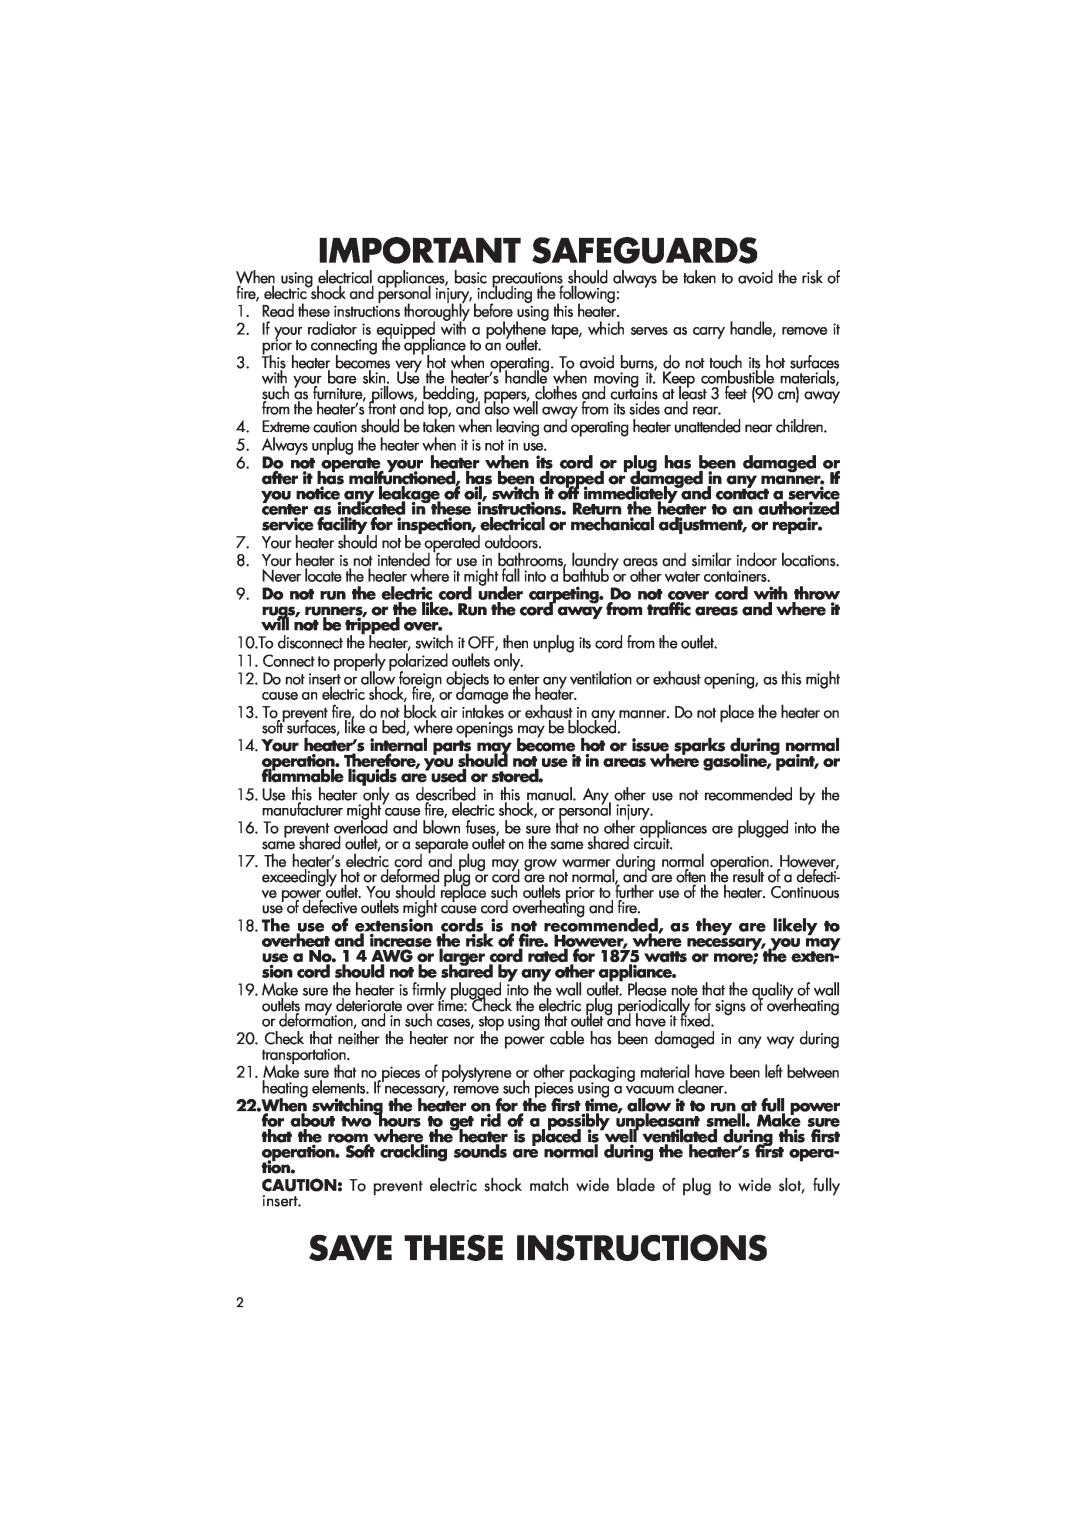 DeLonghi 6708EK manual Important Safeguards, Save These Instructions 